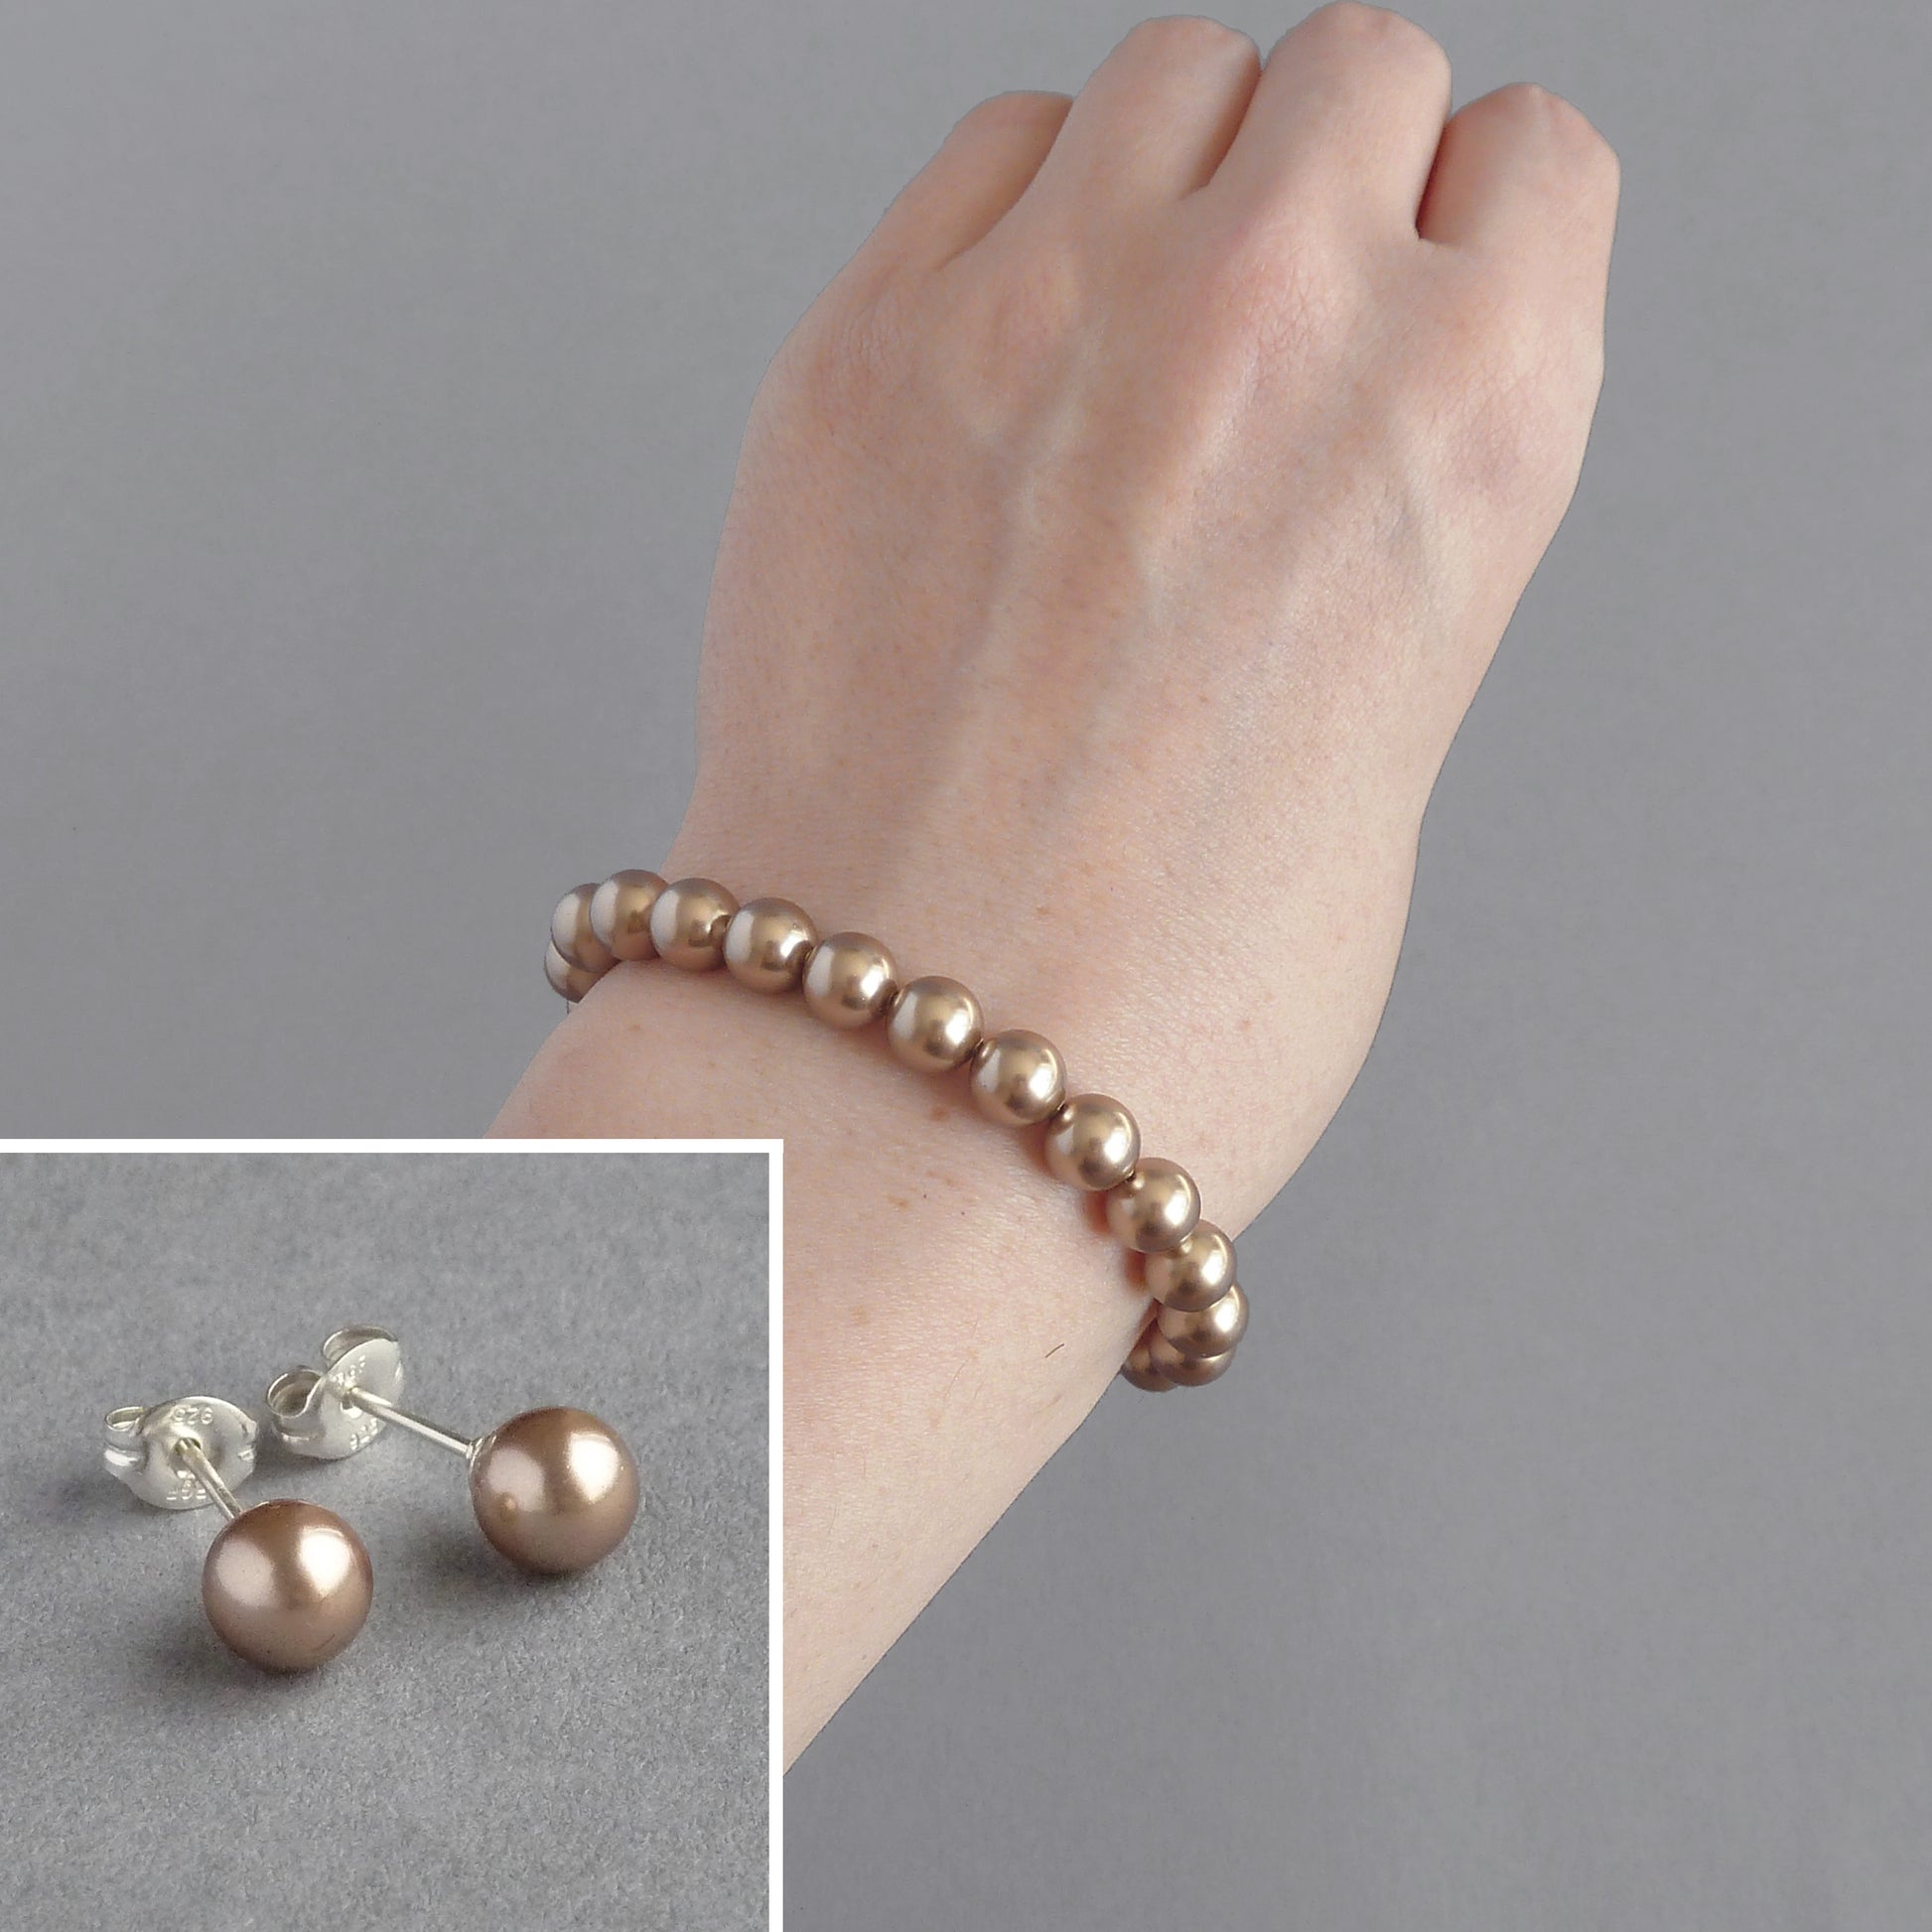 Bronze pearl bracelet and earrings set